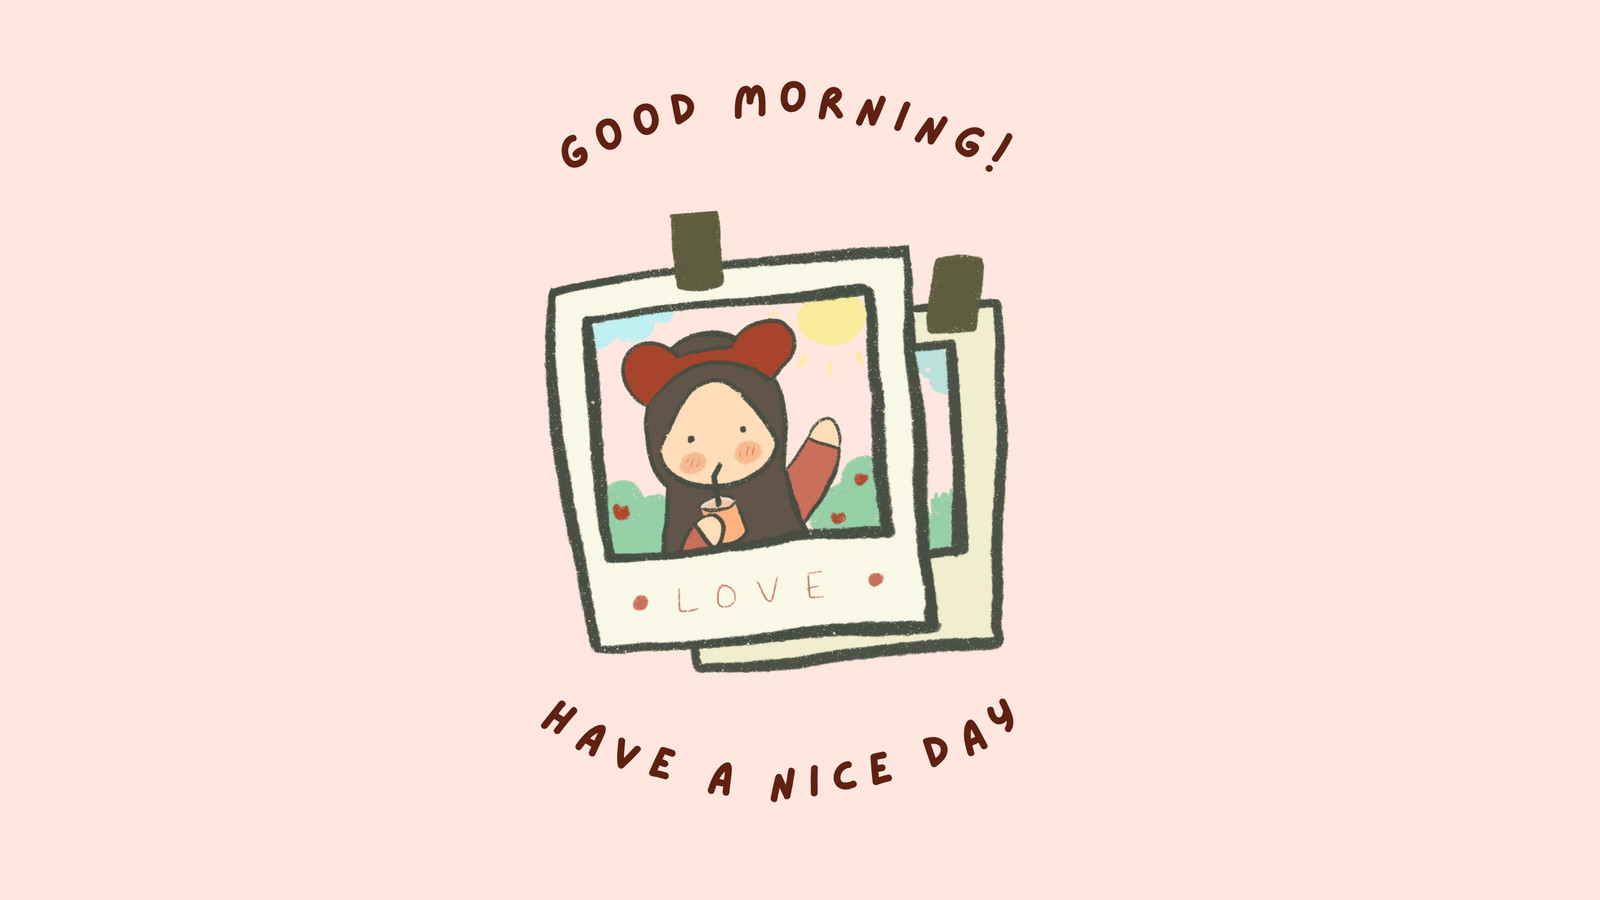 Animated Good Morning Wallpaper GIFs | Tenor